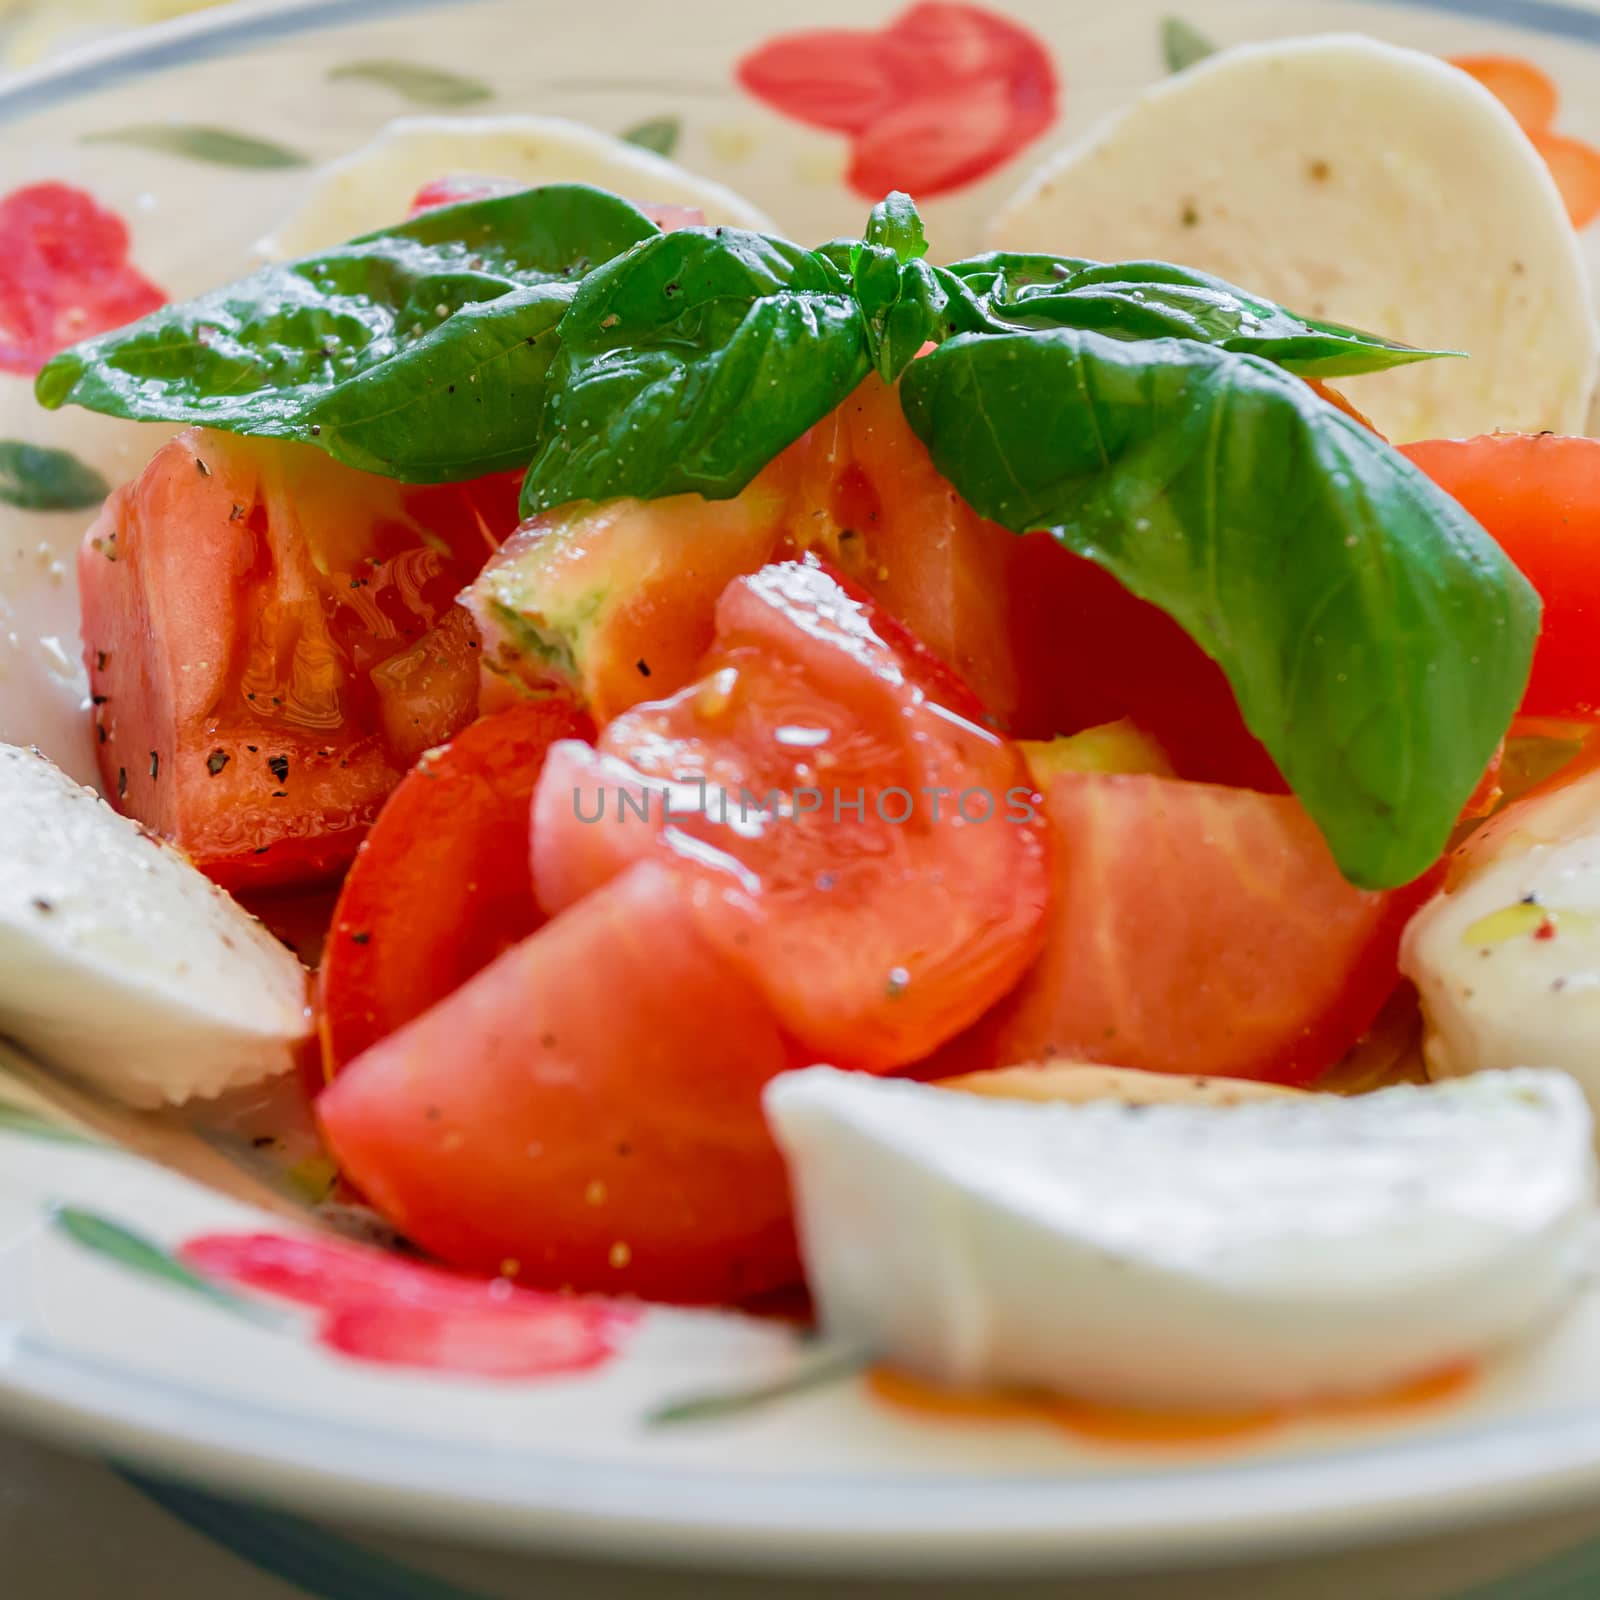 Caprese salad with mozzarella and tomatoes, closeup photo. Defocused blurry background.